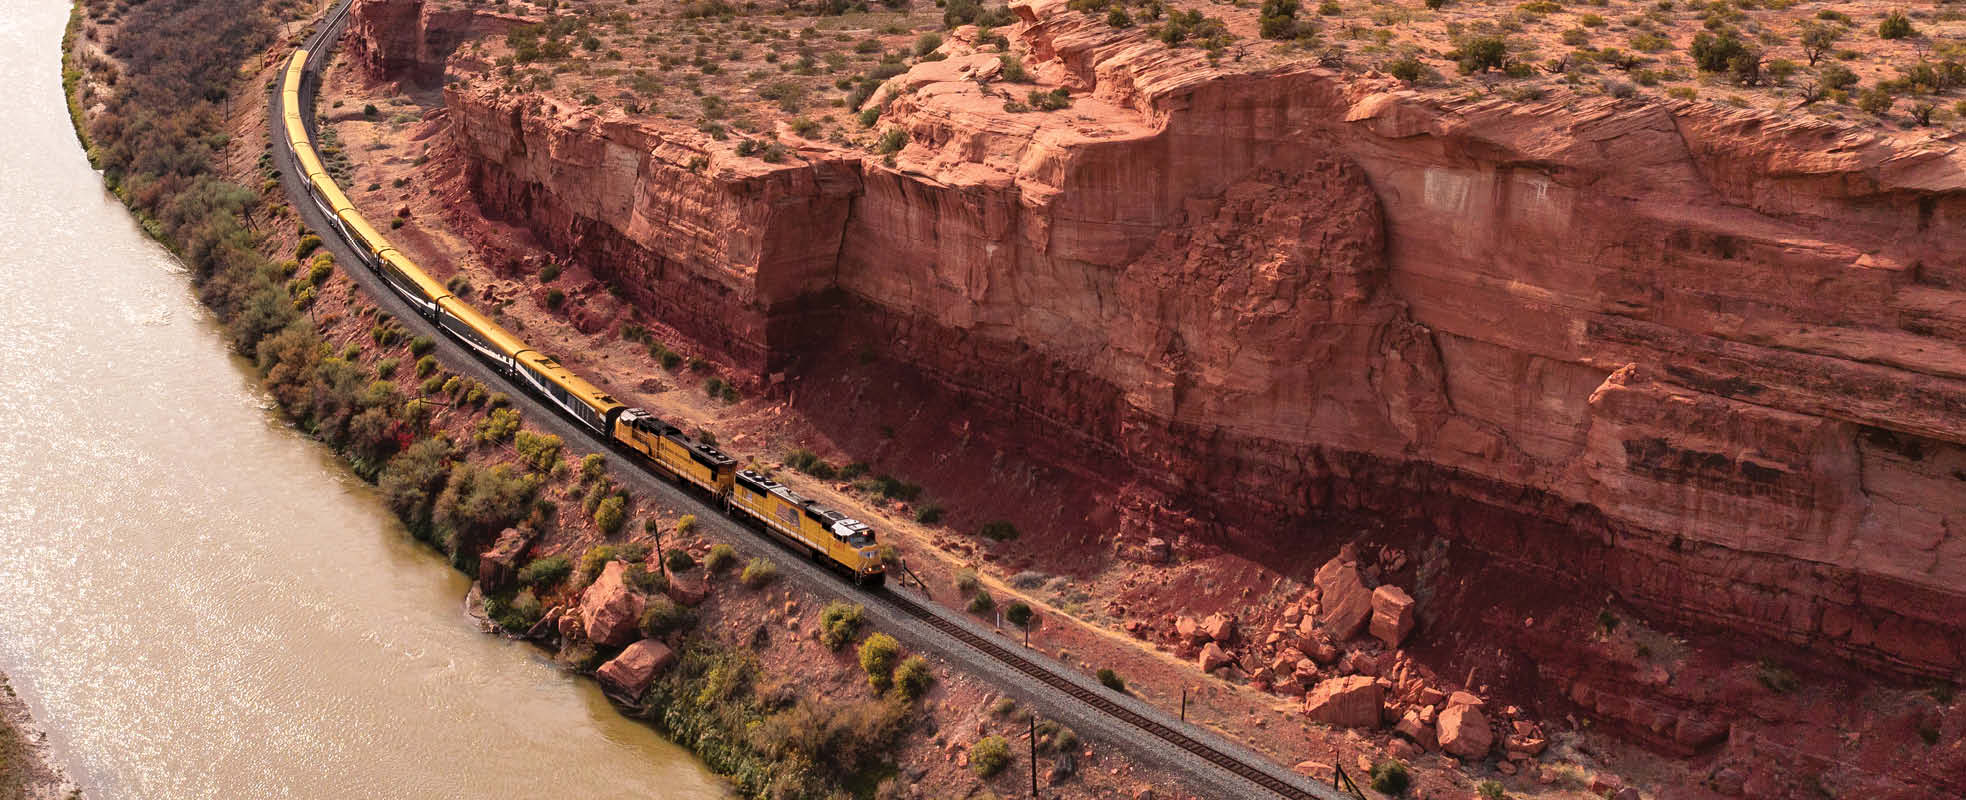 Rocky Mountaineer traversing through the Ruby Canyon, USA